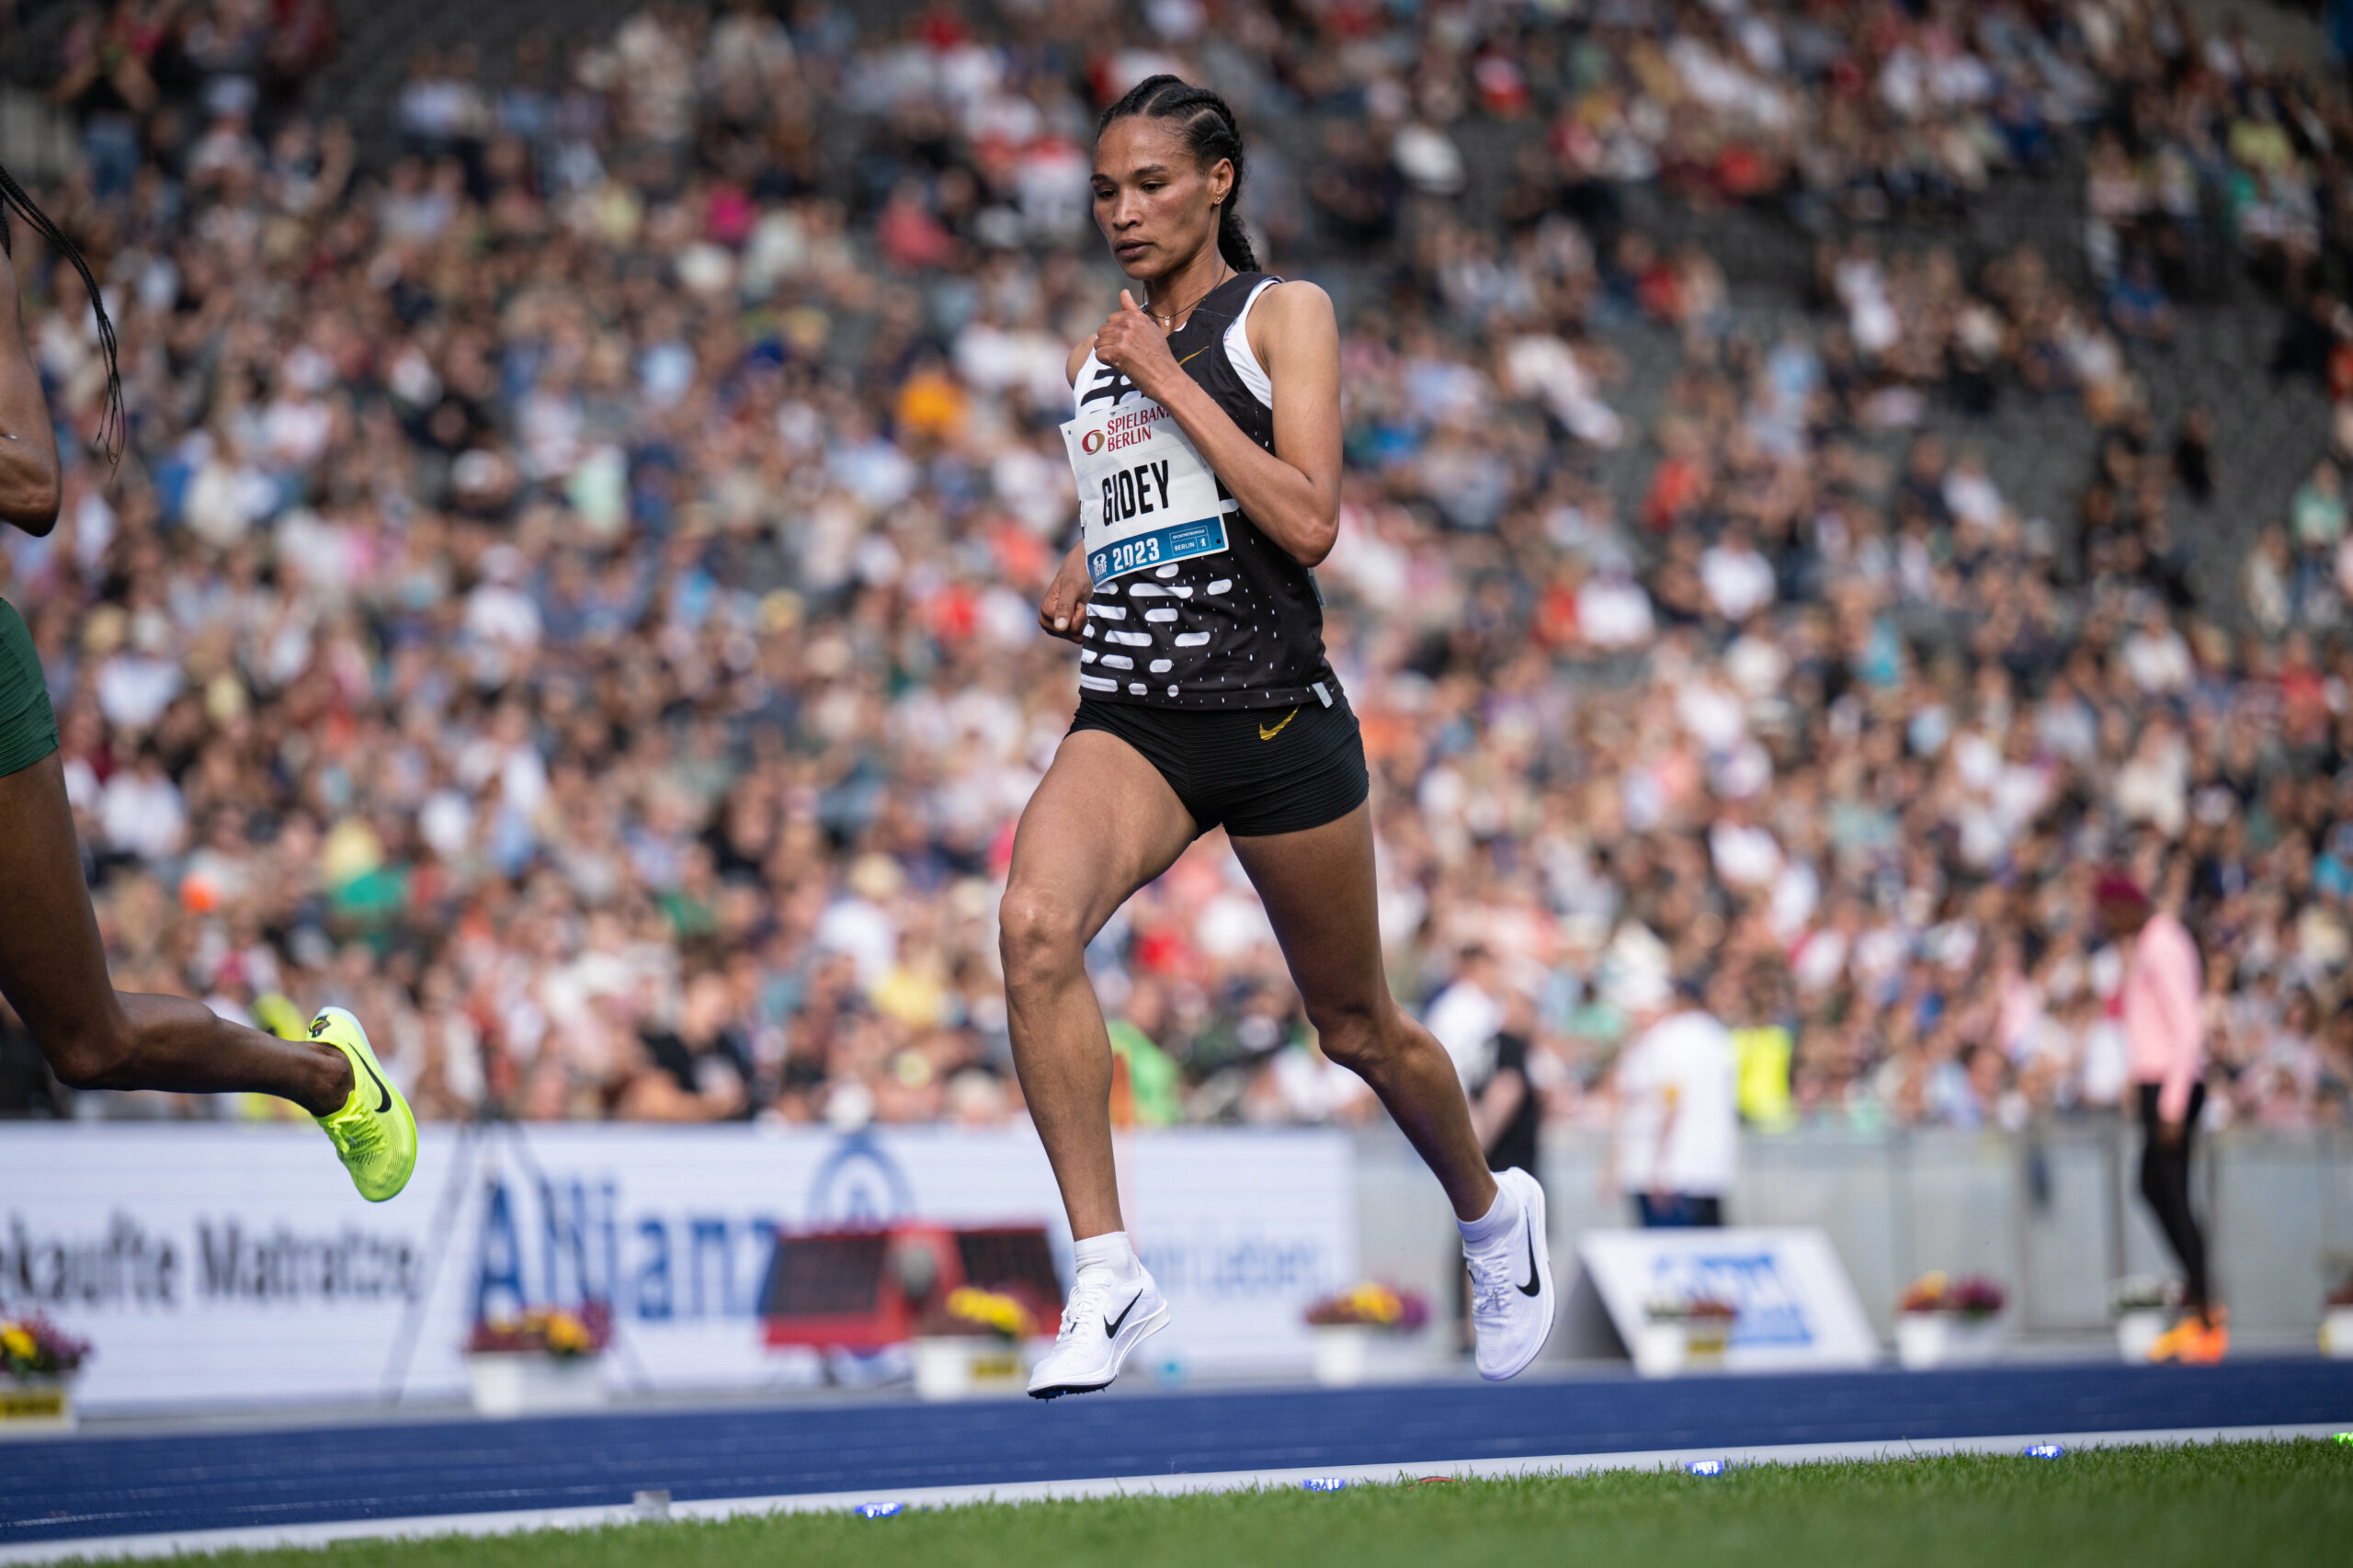 Letesenbet Gidey just misses 5,000m world record in Berlin